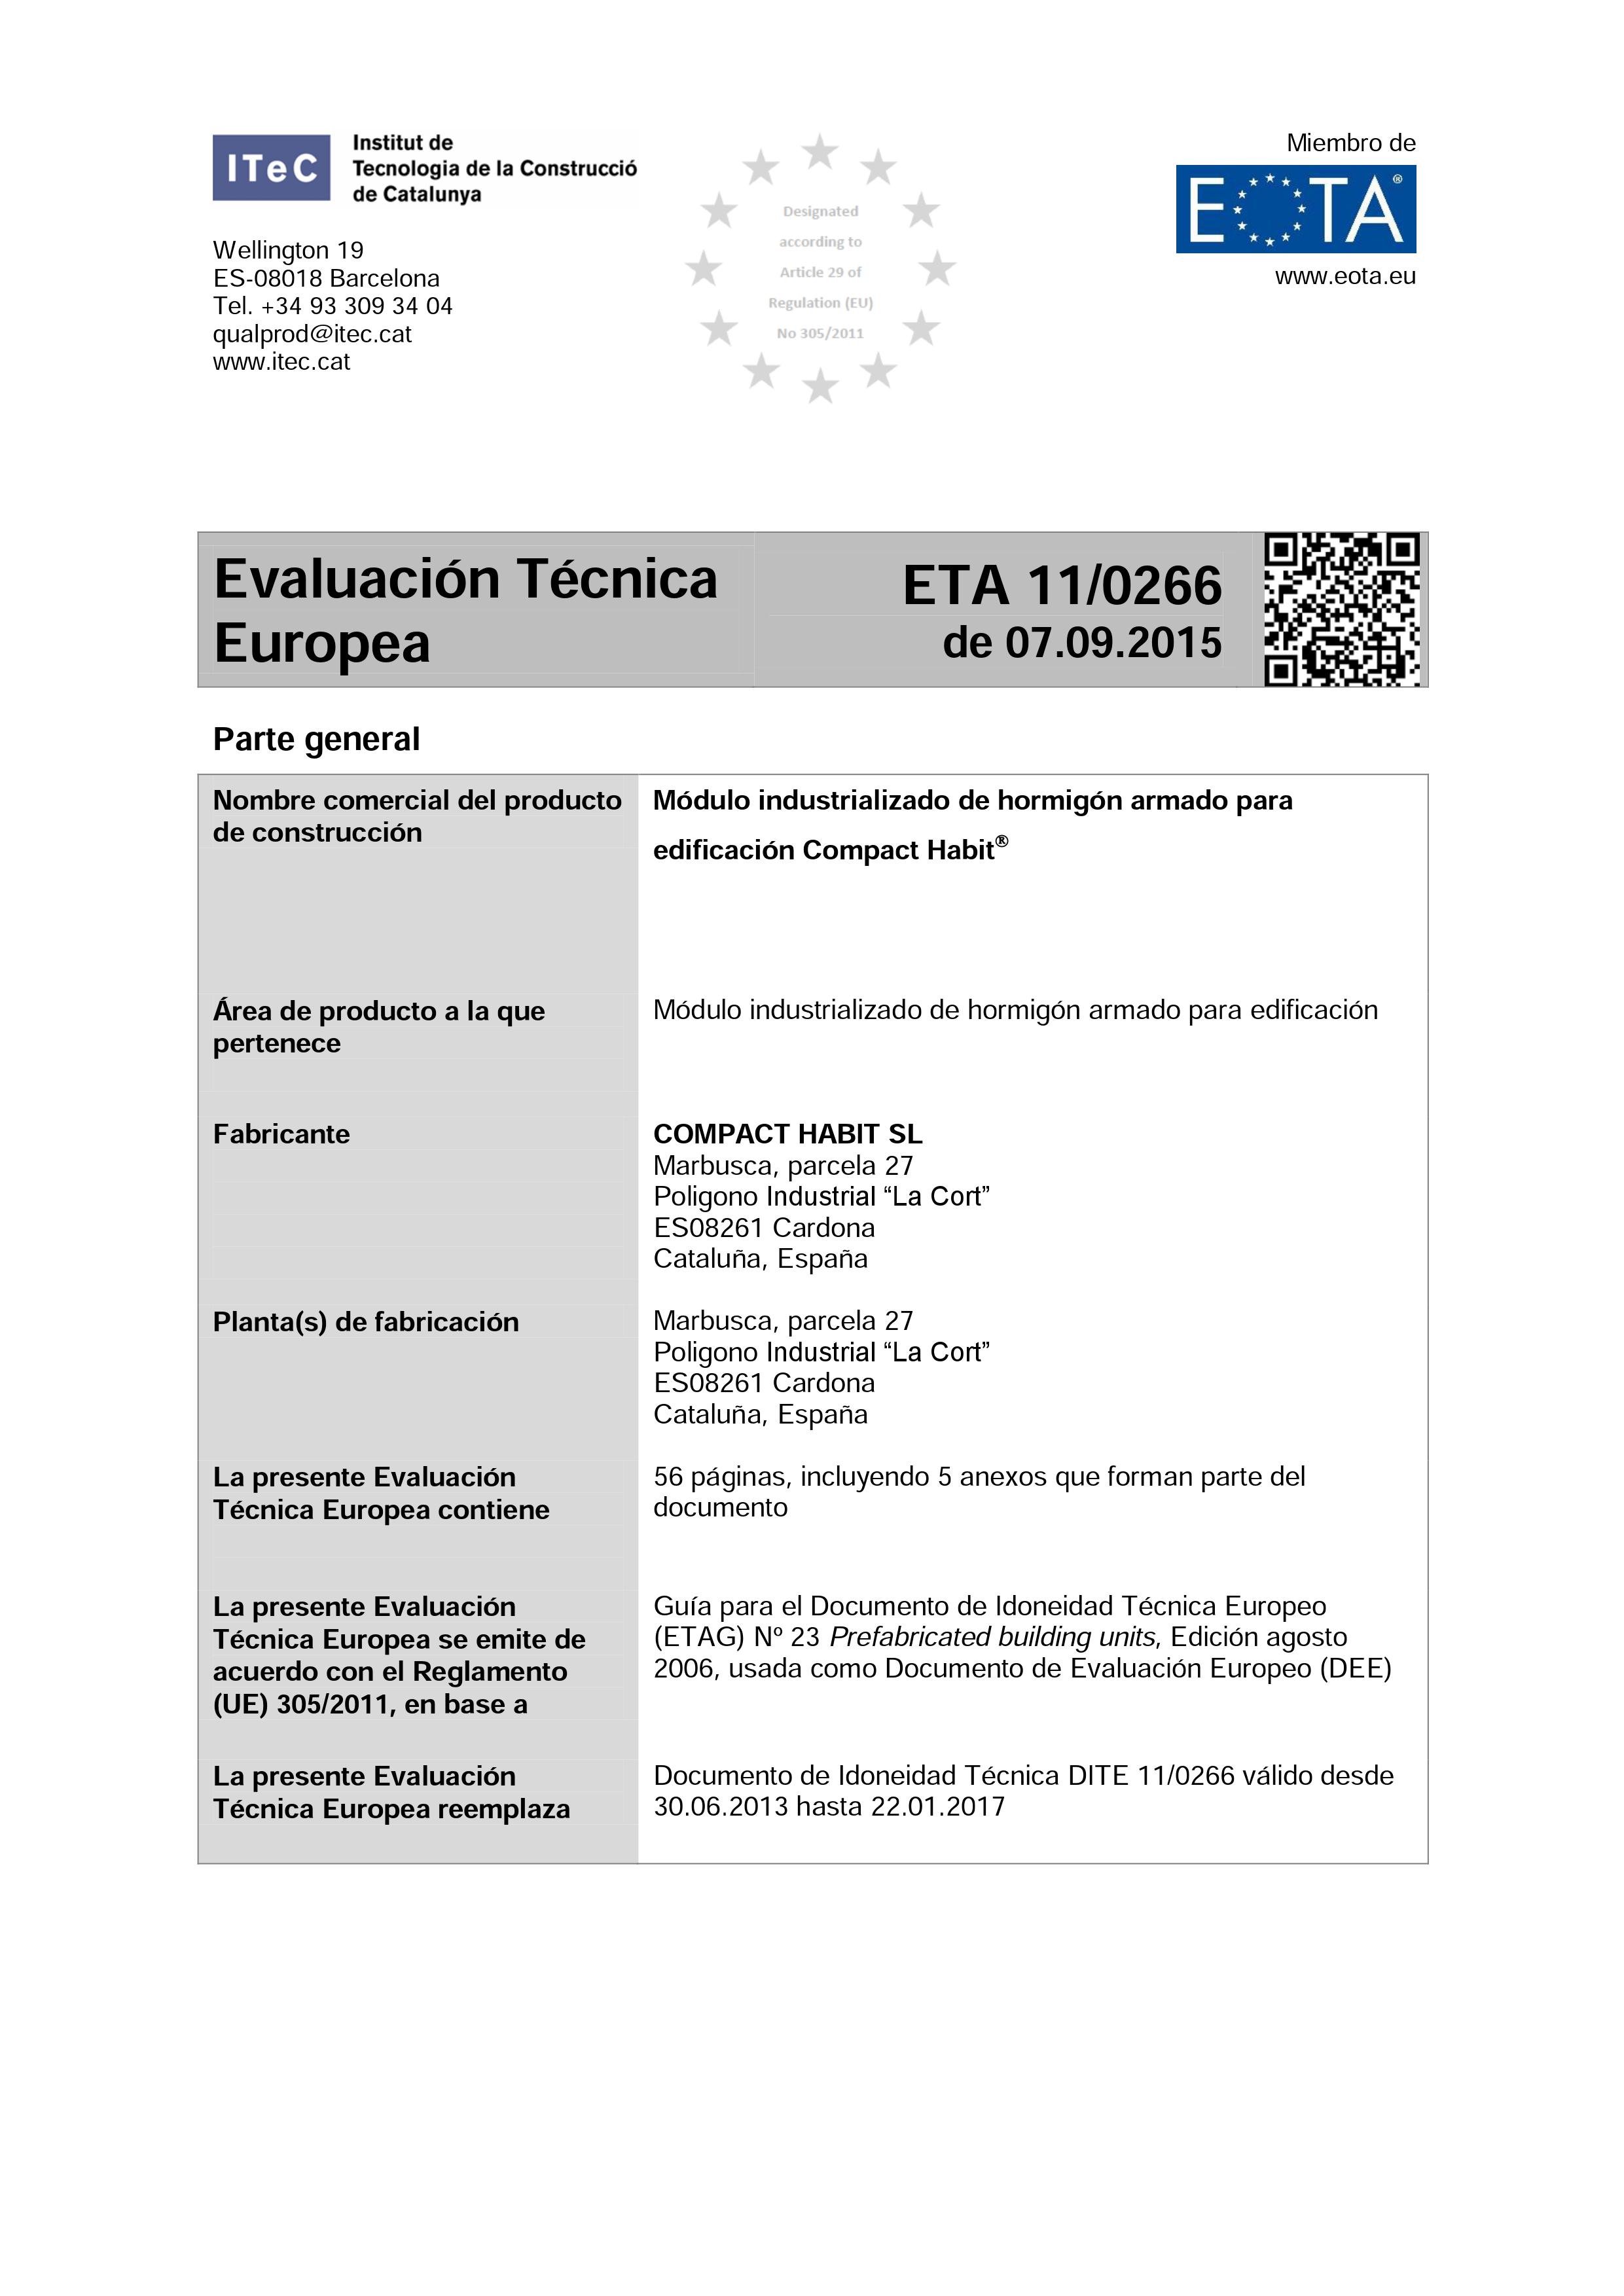 ETE evaluació técnica europea compacthabit eMii-C